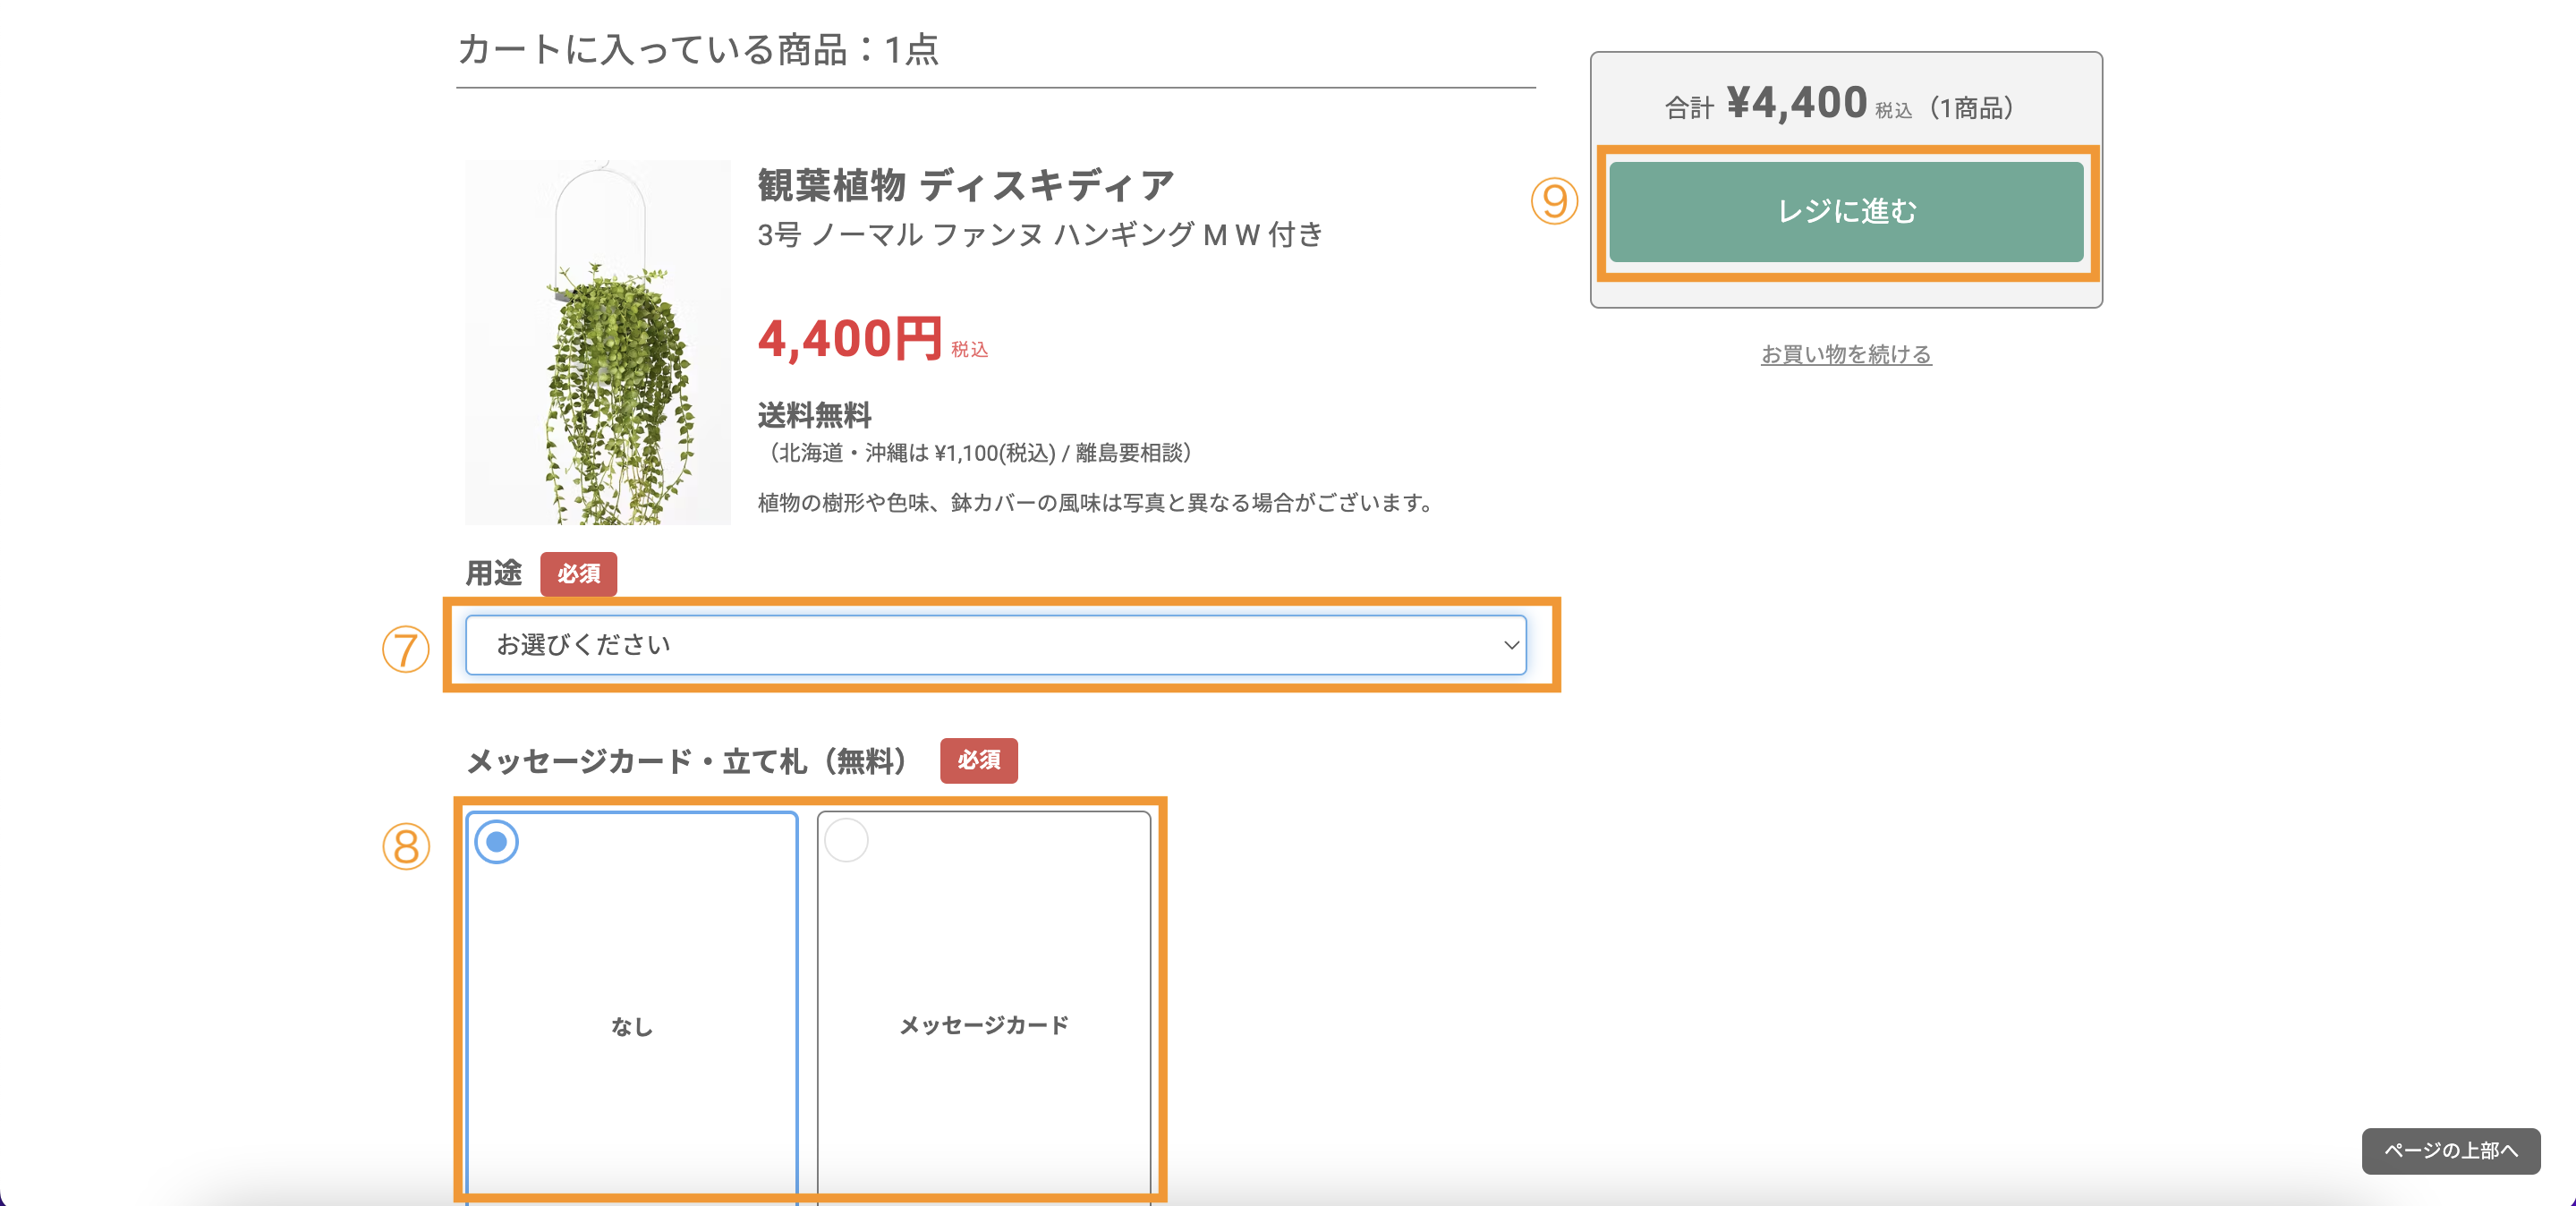 hitohana公式サイト用途選択画面